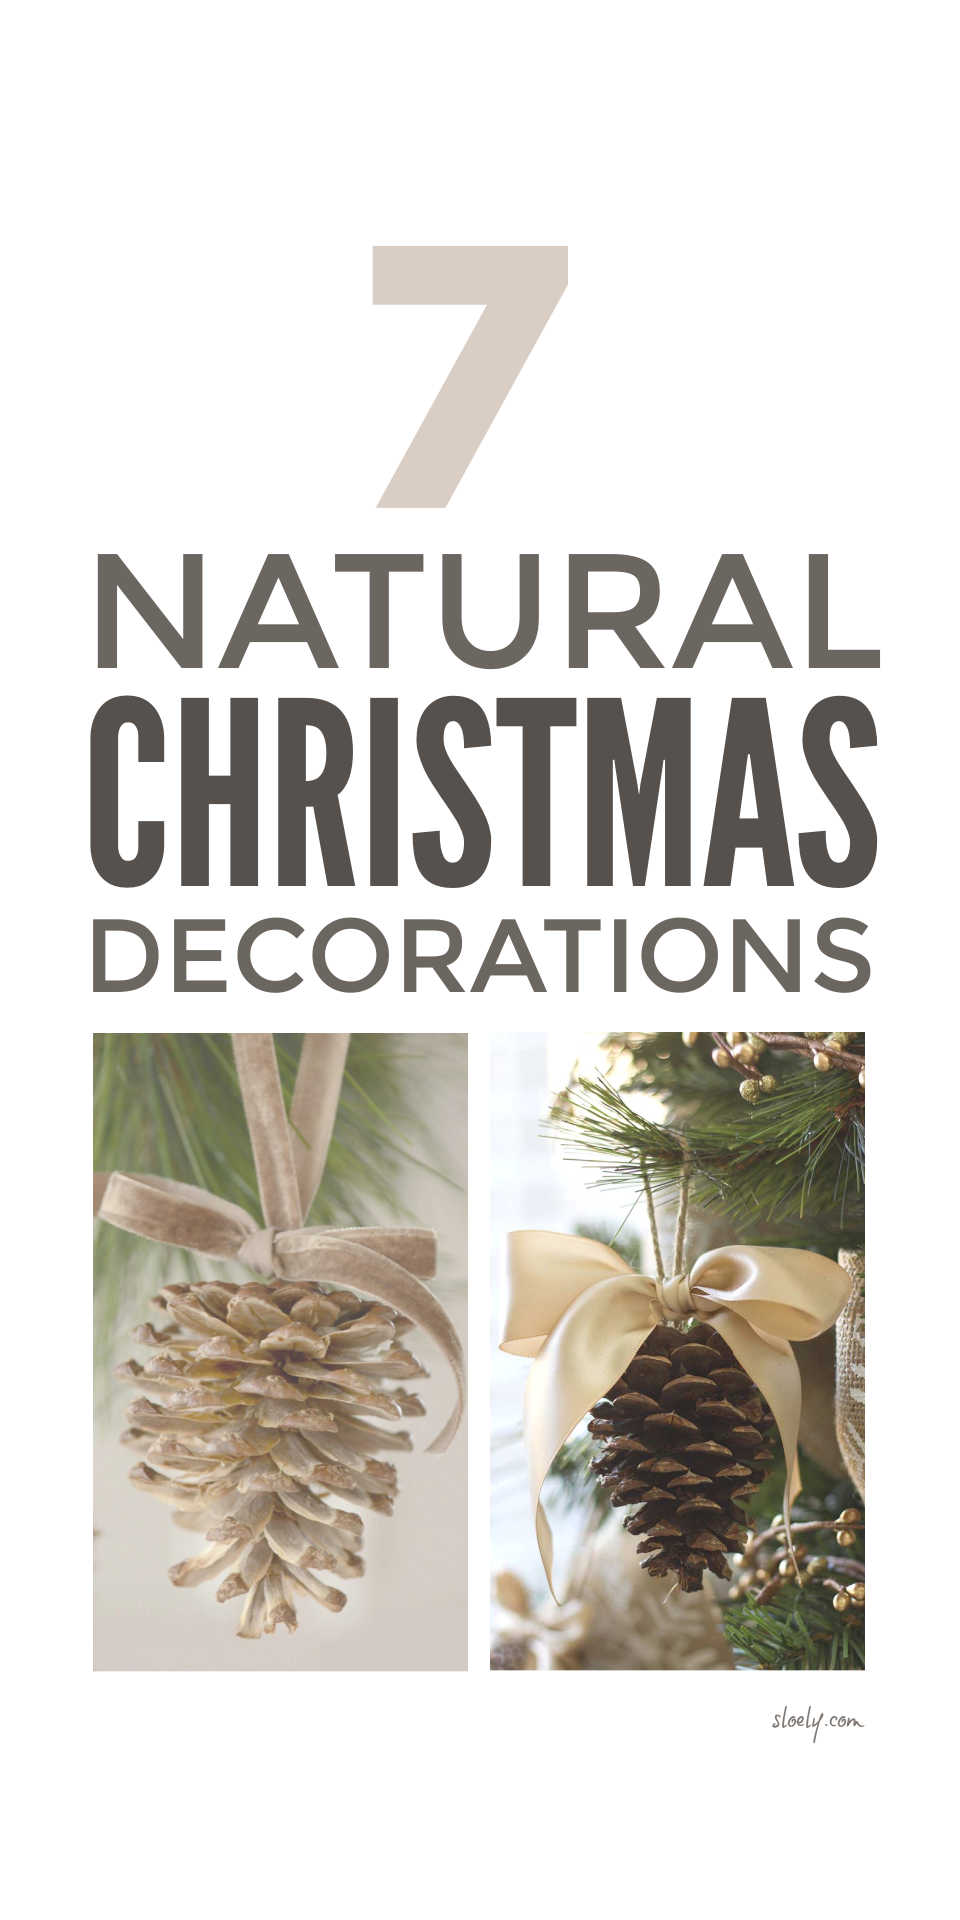 Natural Christmas Decorations